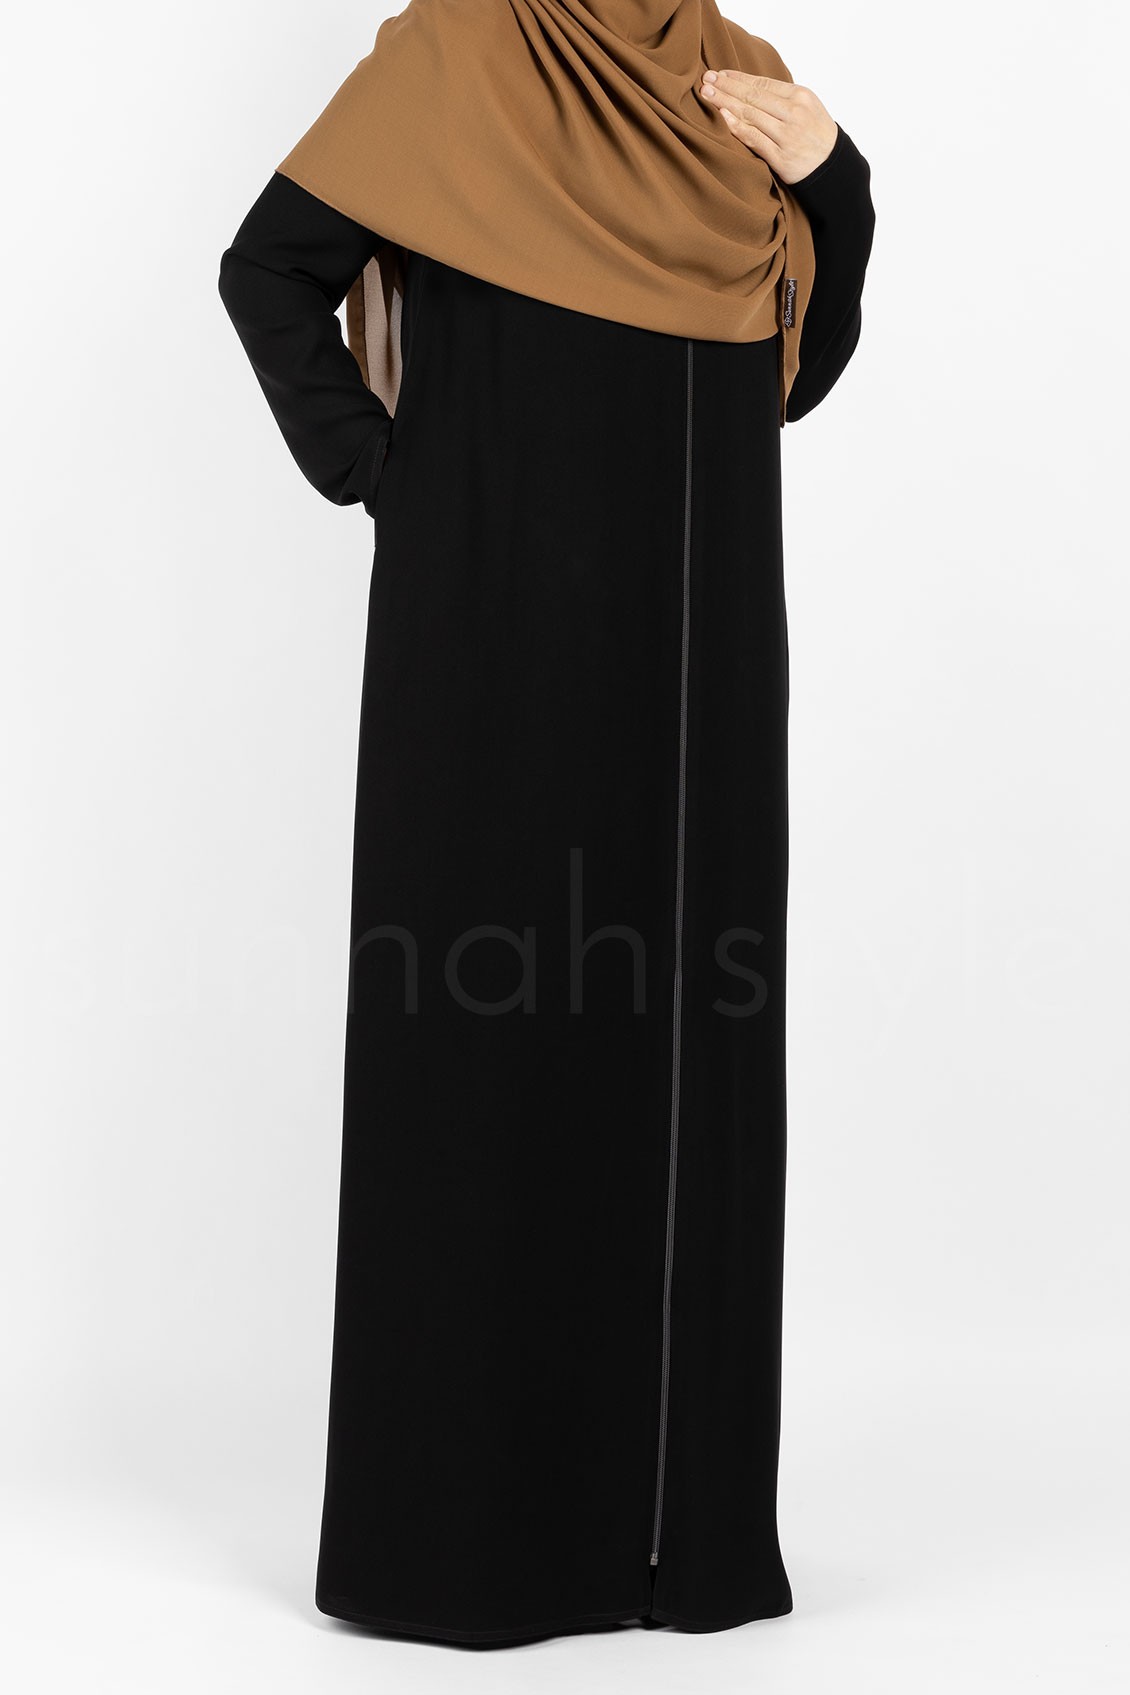 Sunnah Style Essentials Full Zip Abaya Black Slim